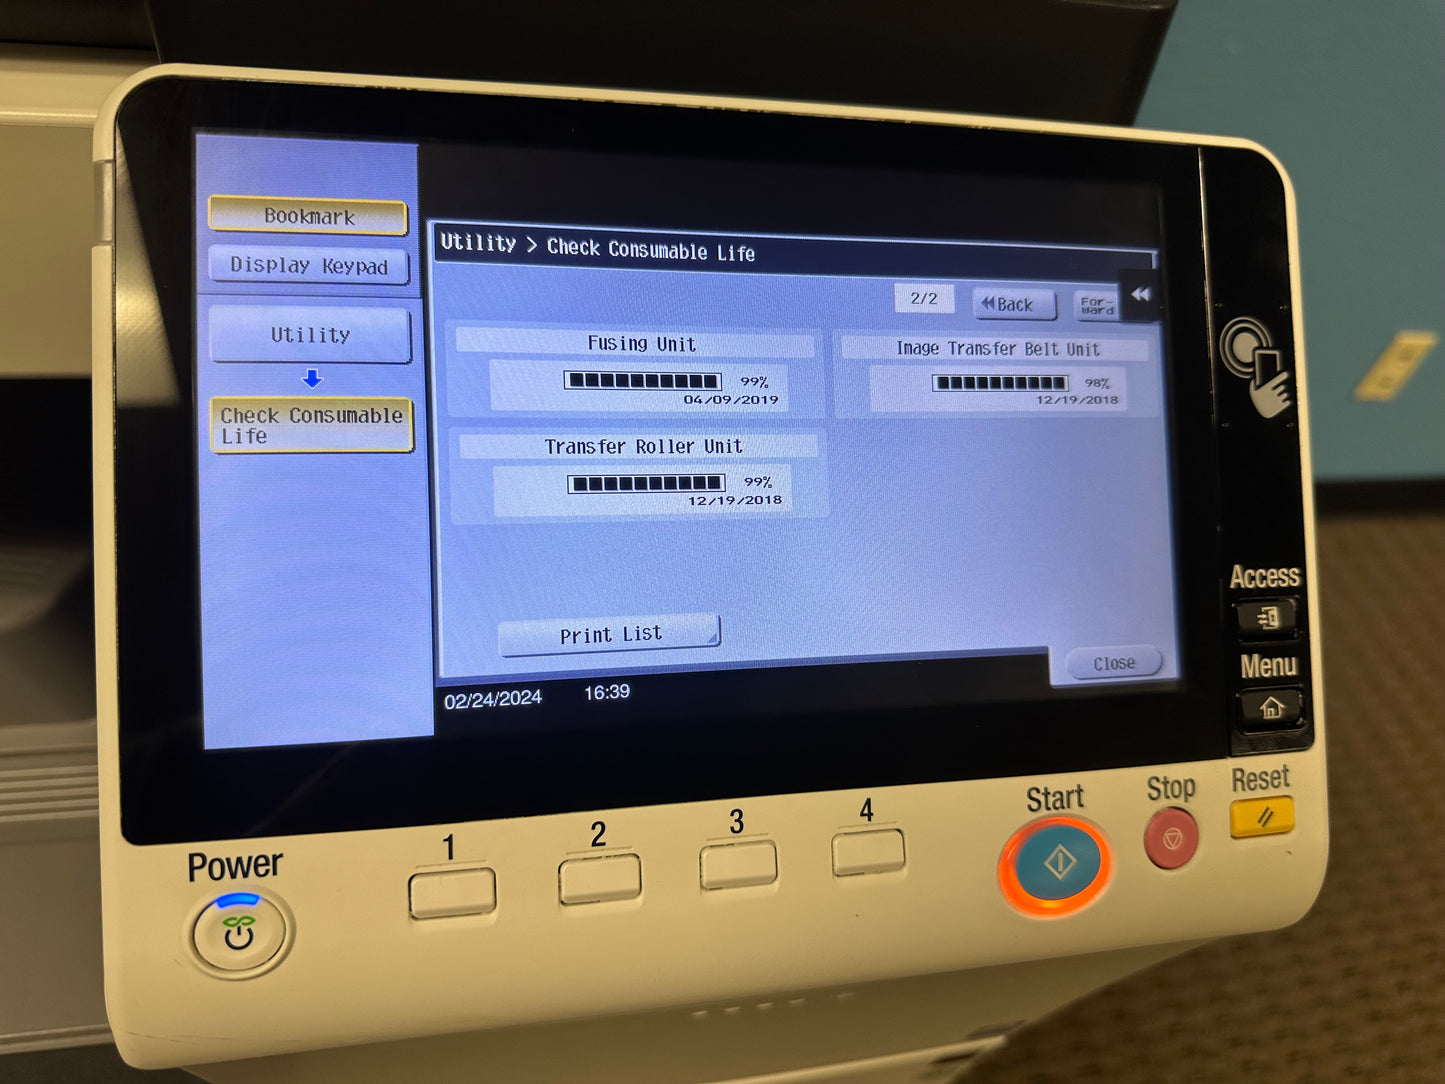 Demo Konica Minolta Bizhub C308 Color Copier Printer Scan Fax Low Use 7K